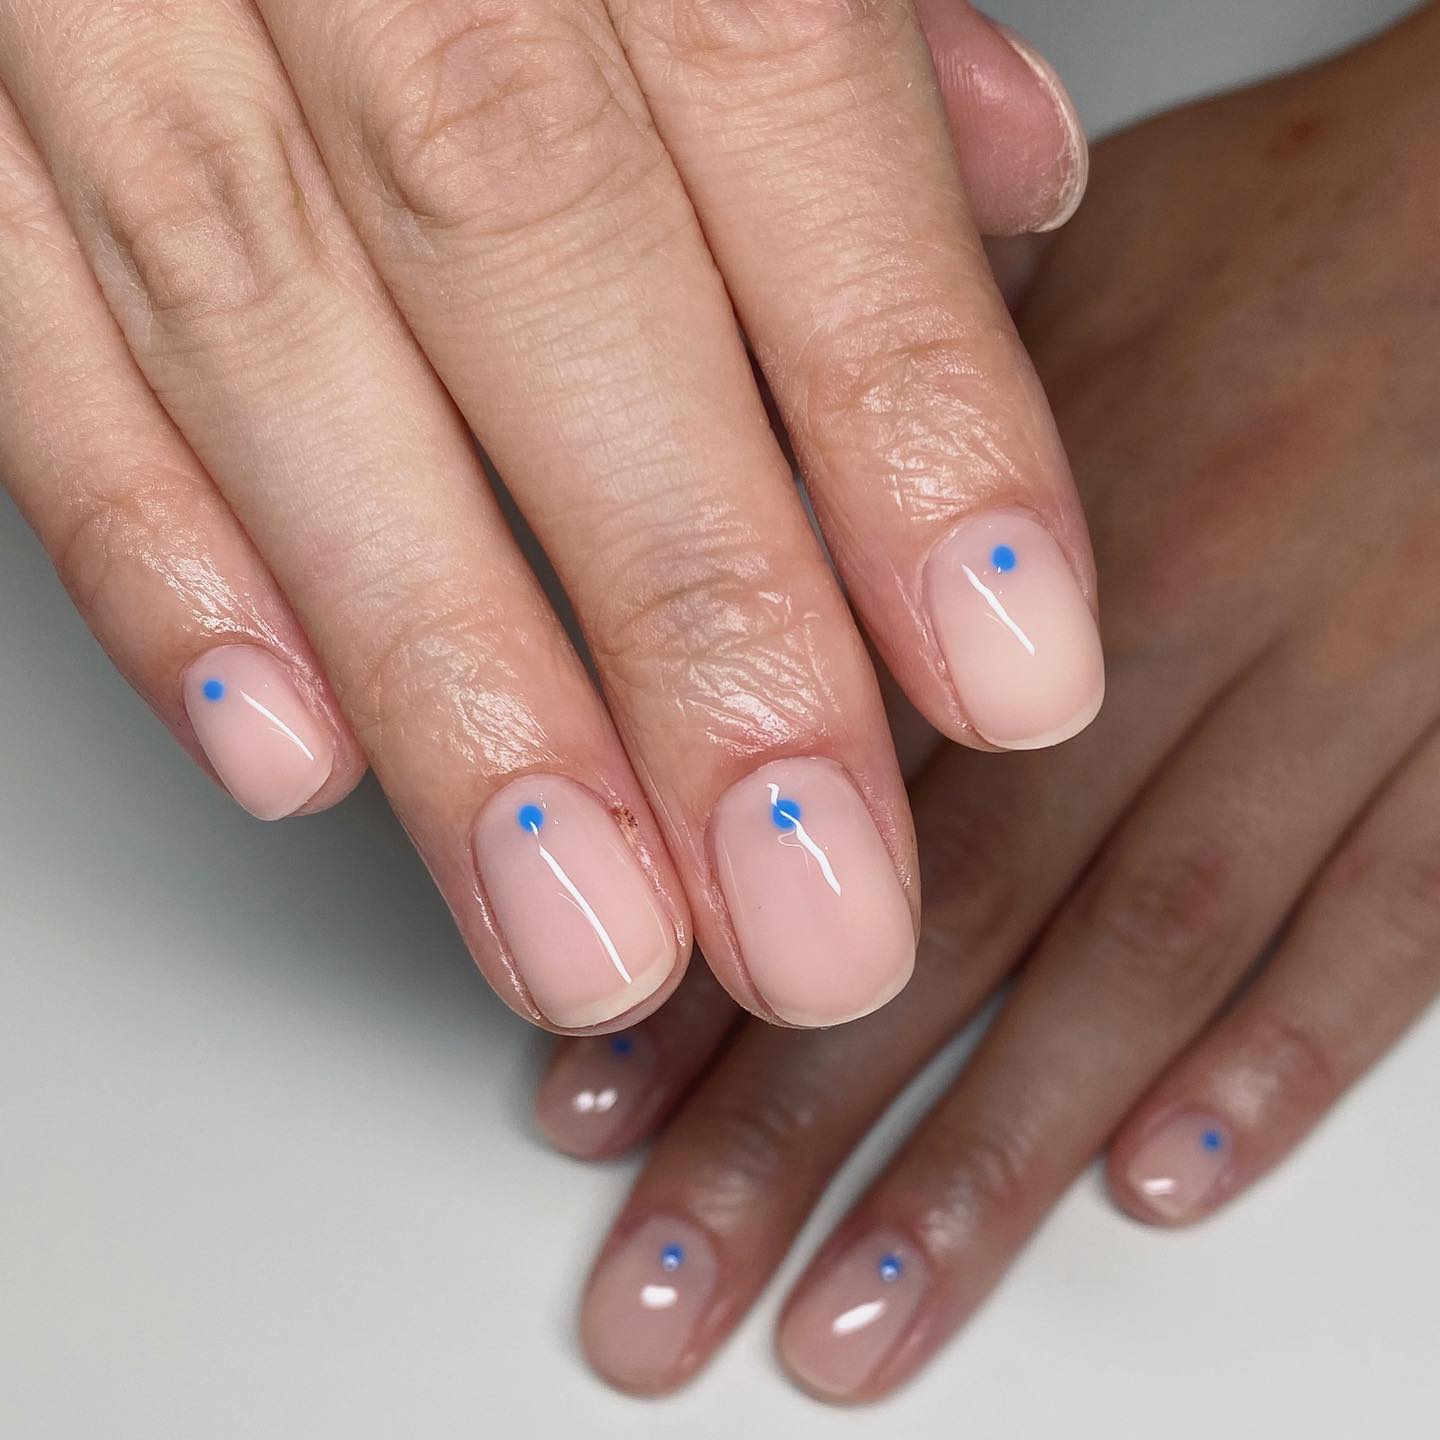 Diy Clear Nail Paint/Homemade transparent nail polish/how to make clear  nail paint at home - YouTube